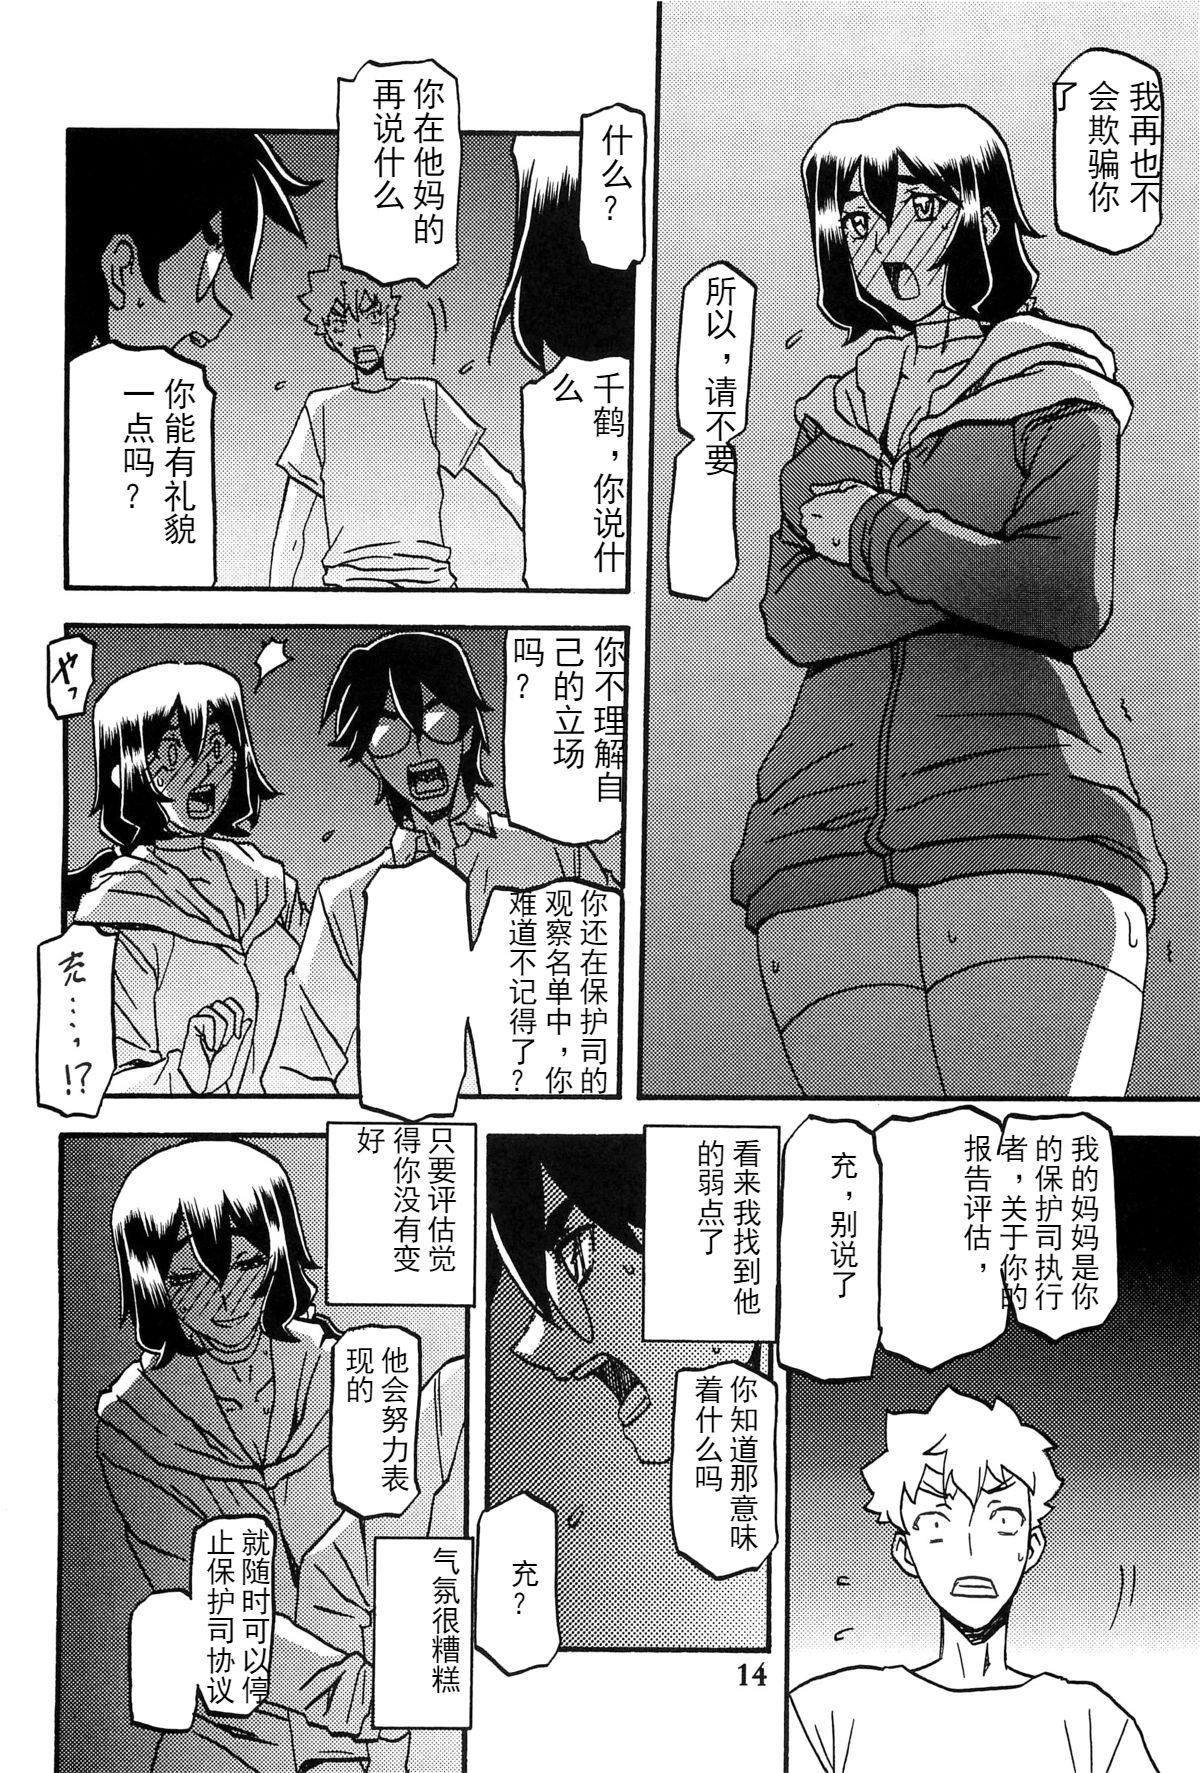 Tgirls Akebi no Mi - Chizuru AFTER - Akebi no mi From - Page 13